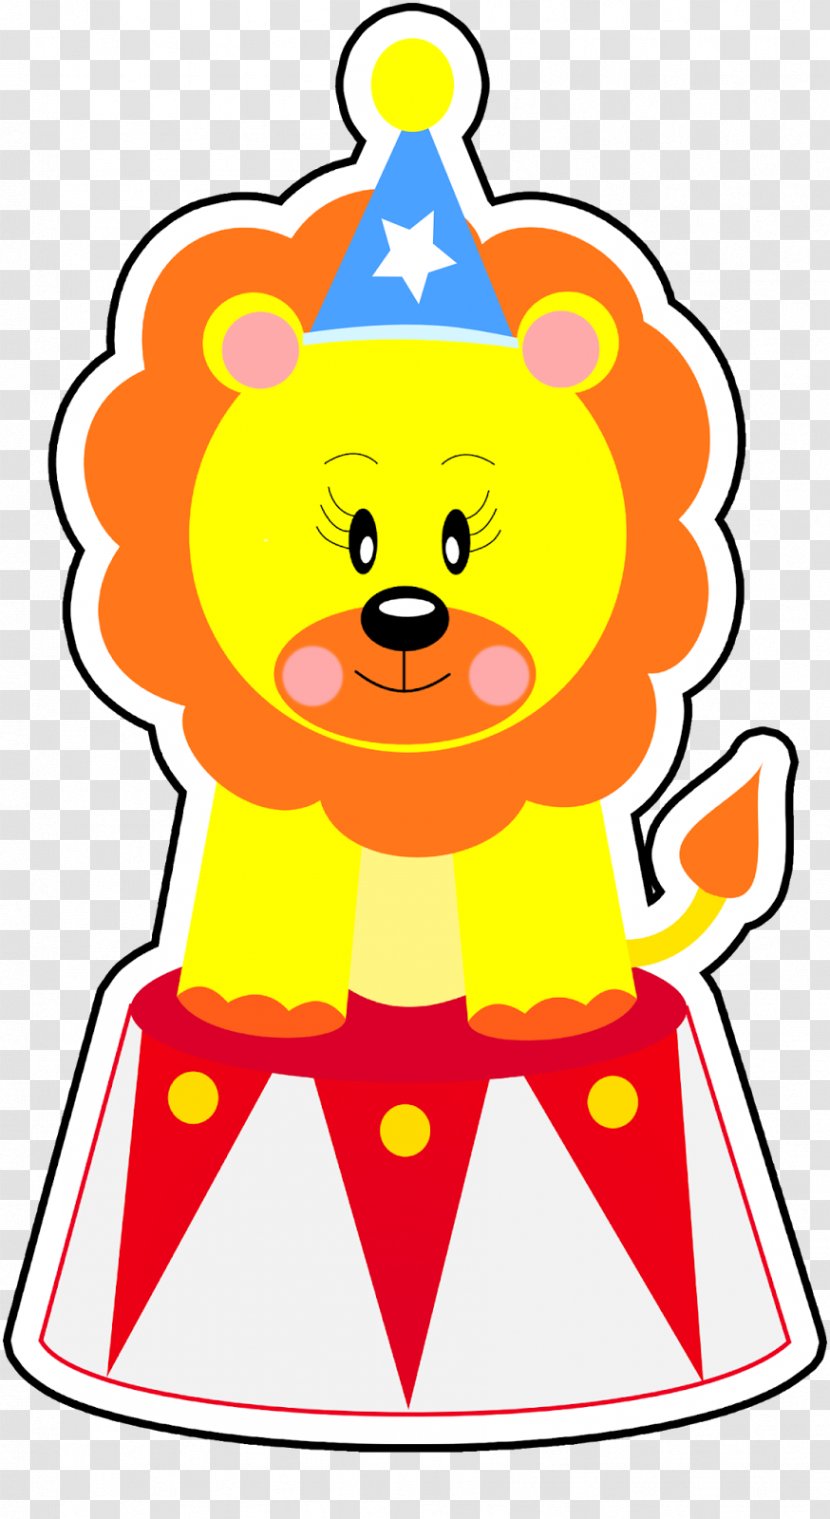 Circus Lion Clown Drawing Image - Smile Transparent PNG